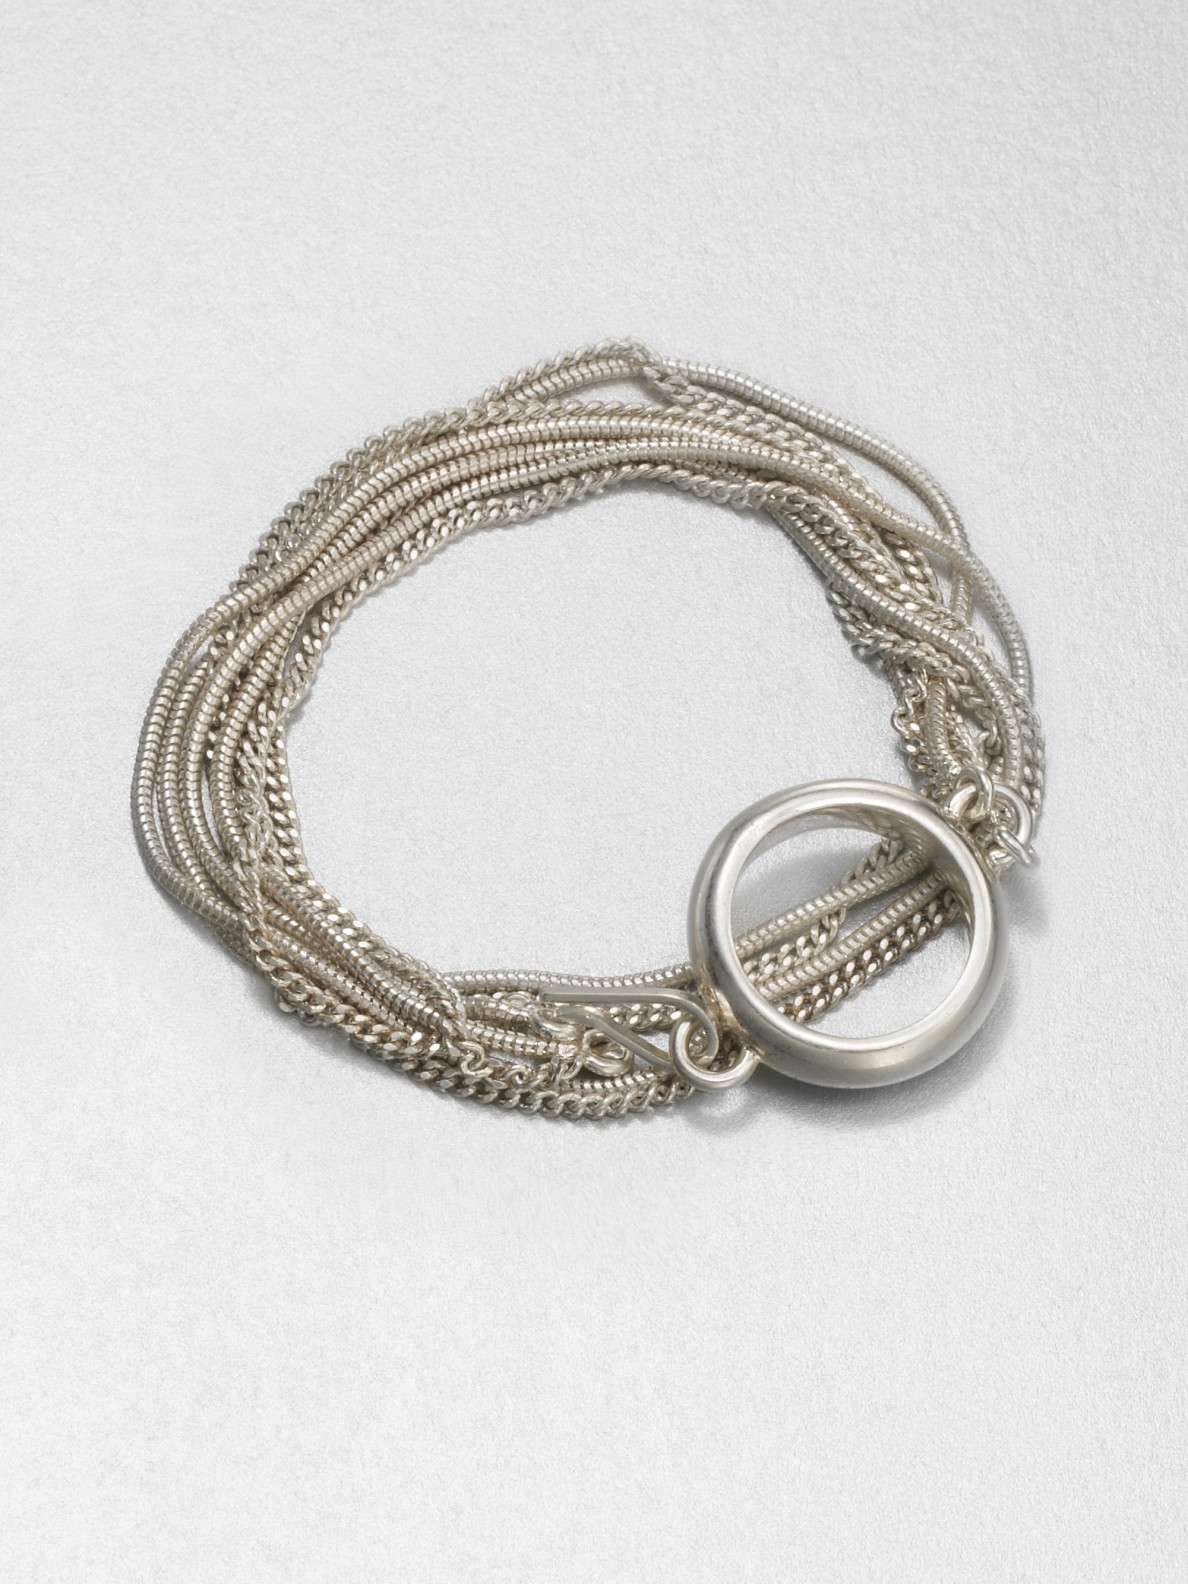 Maison Martin Margiela Multirow Wrap Chain Bracelet in Silver | Lyst